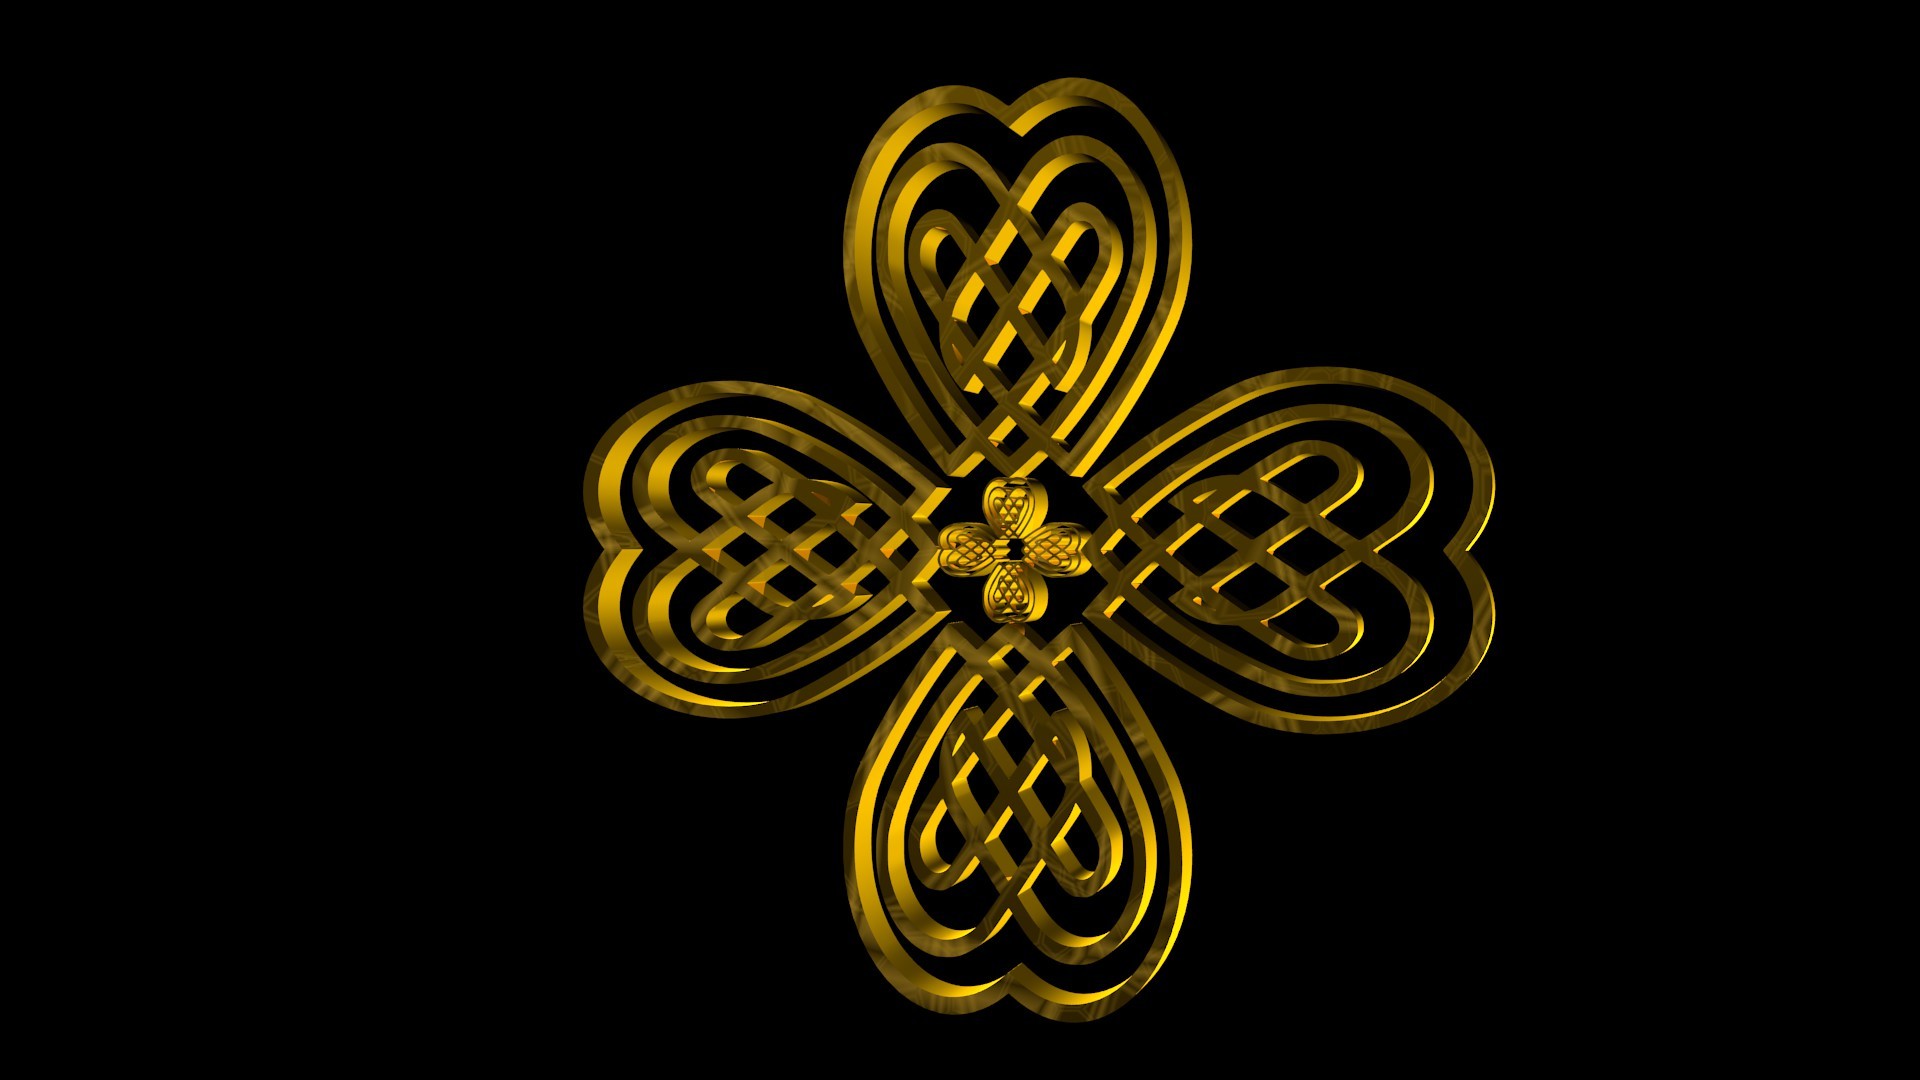 1920x1080 ... Decorative Cross Design(celtic Art Based) by JGH24